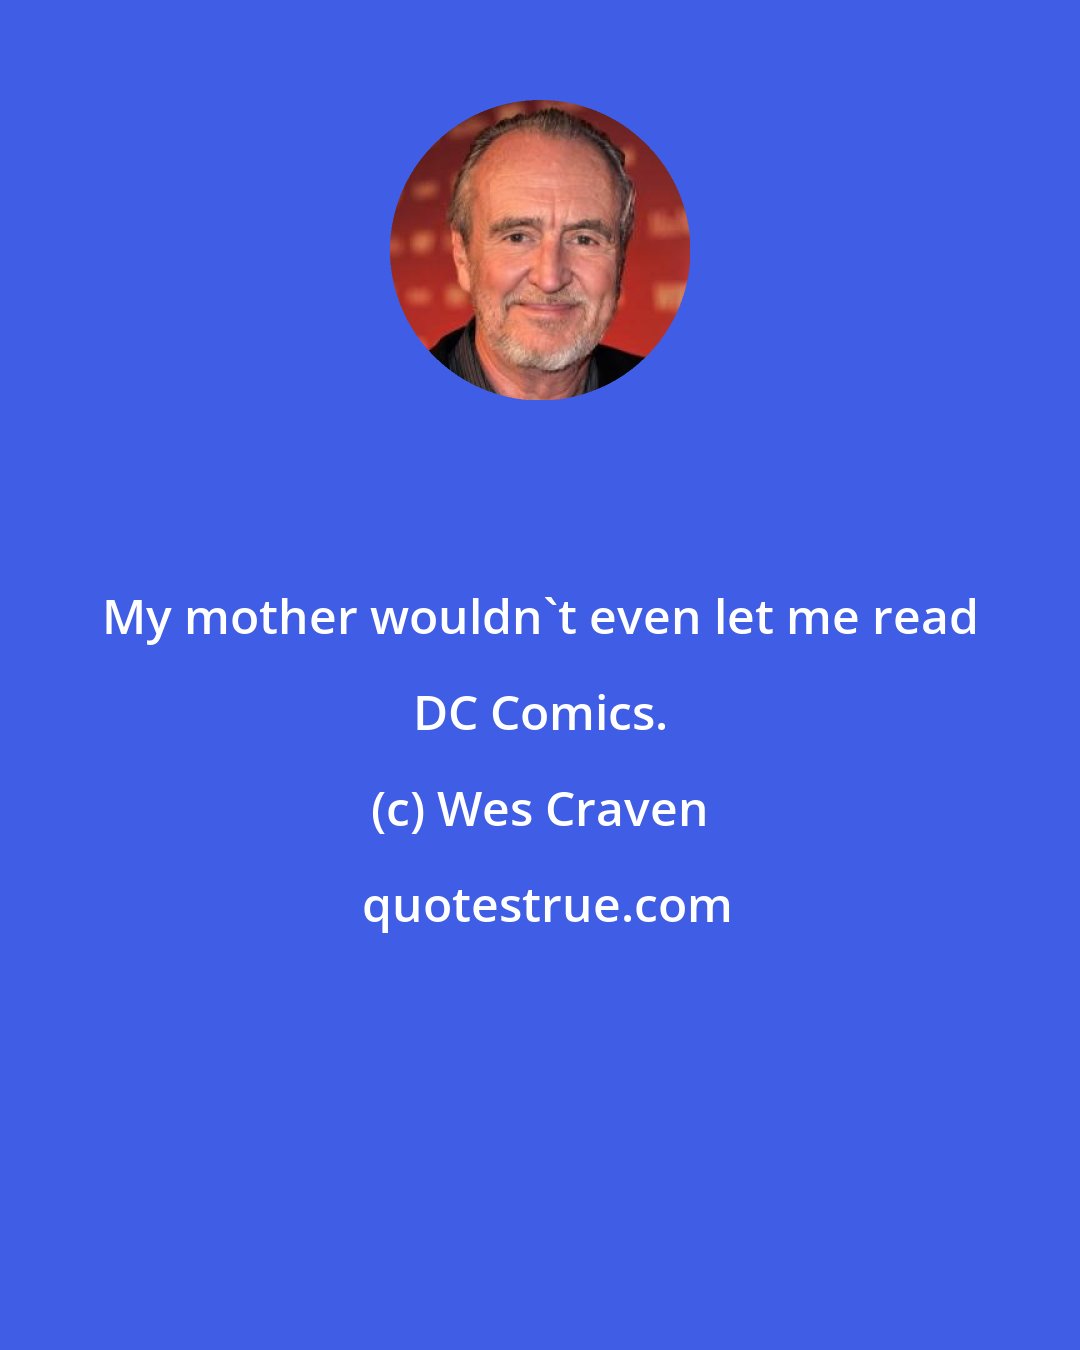 Wes Craven: My mother wouldn't even let me read DC Comics.